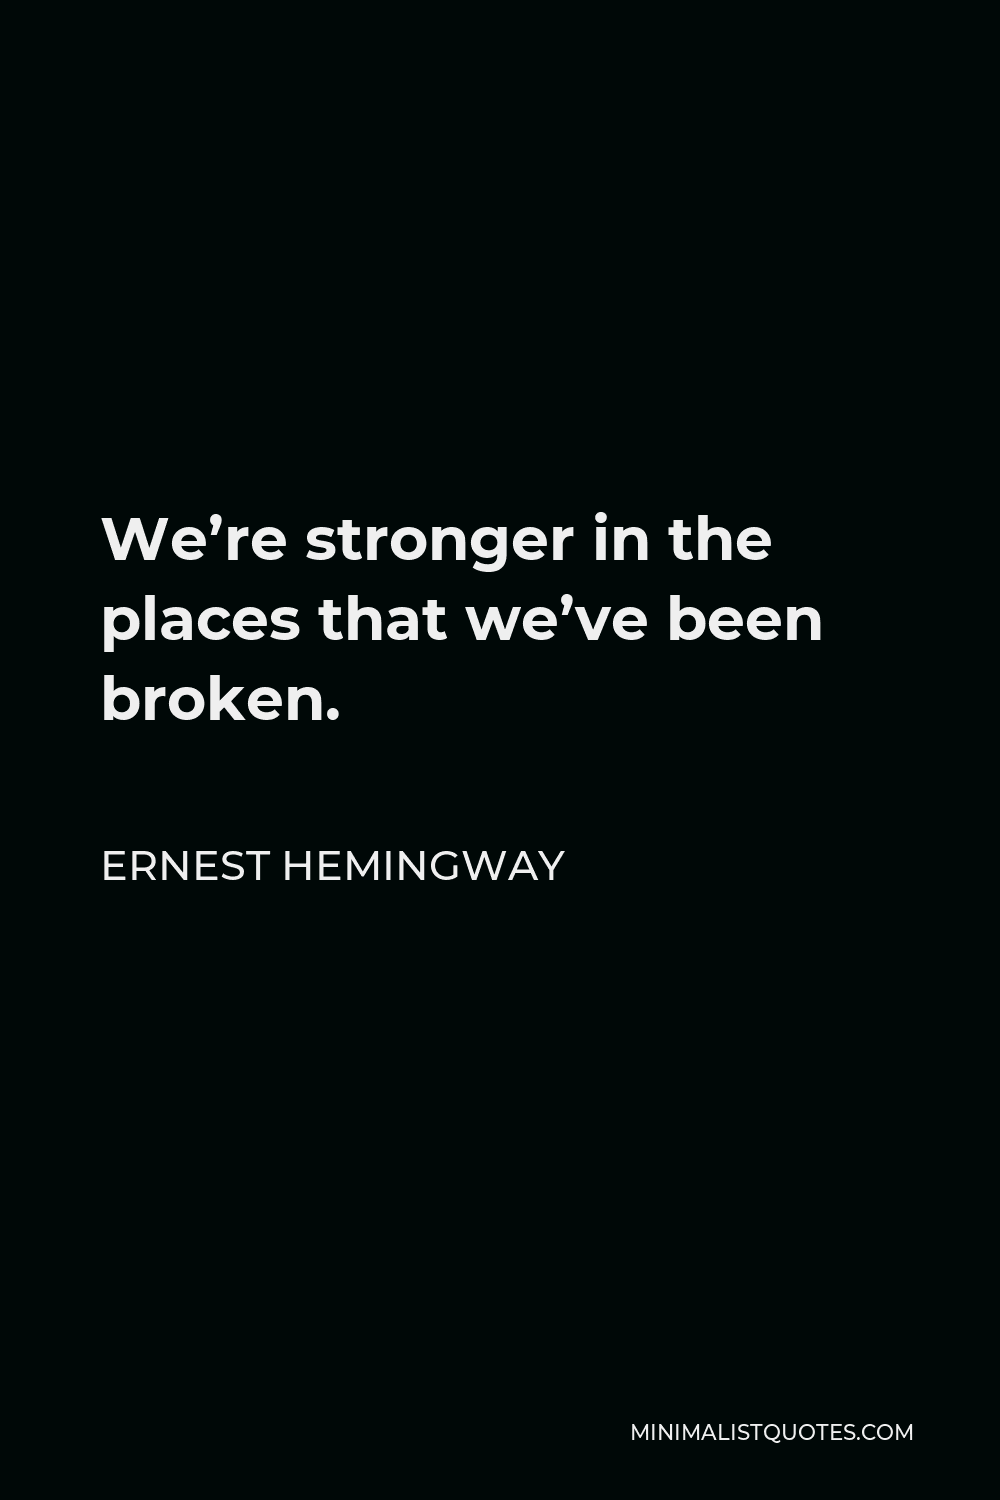 Ernest Hemingway Quote - We’re stronger in the places that we’ve been broken.